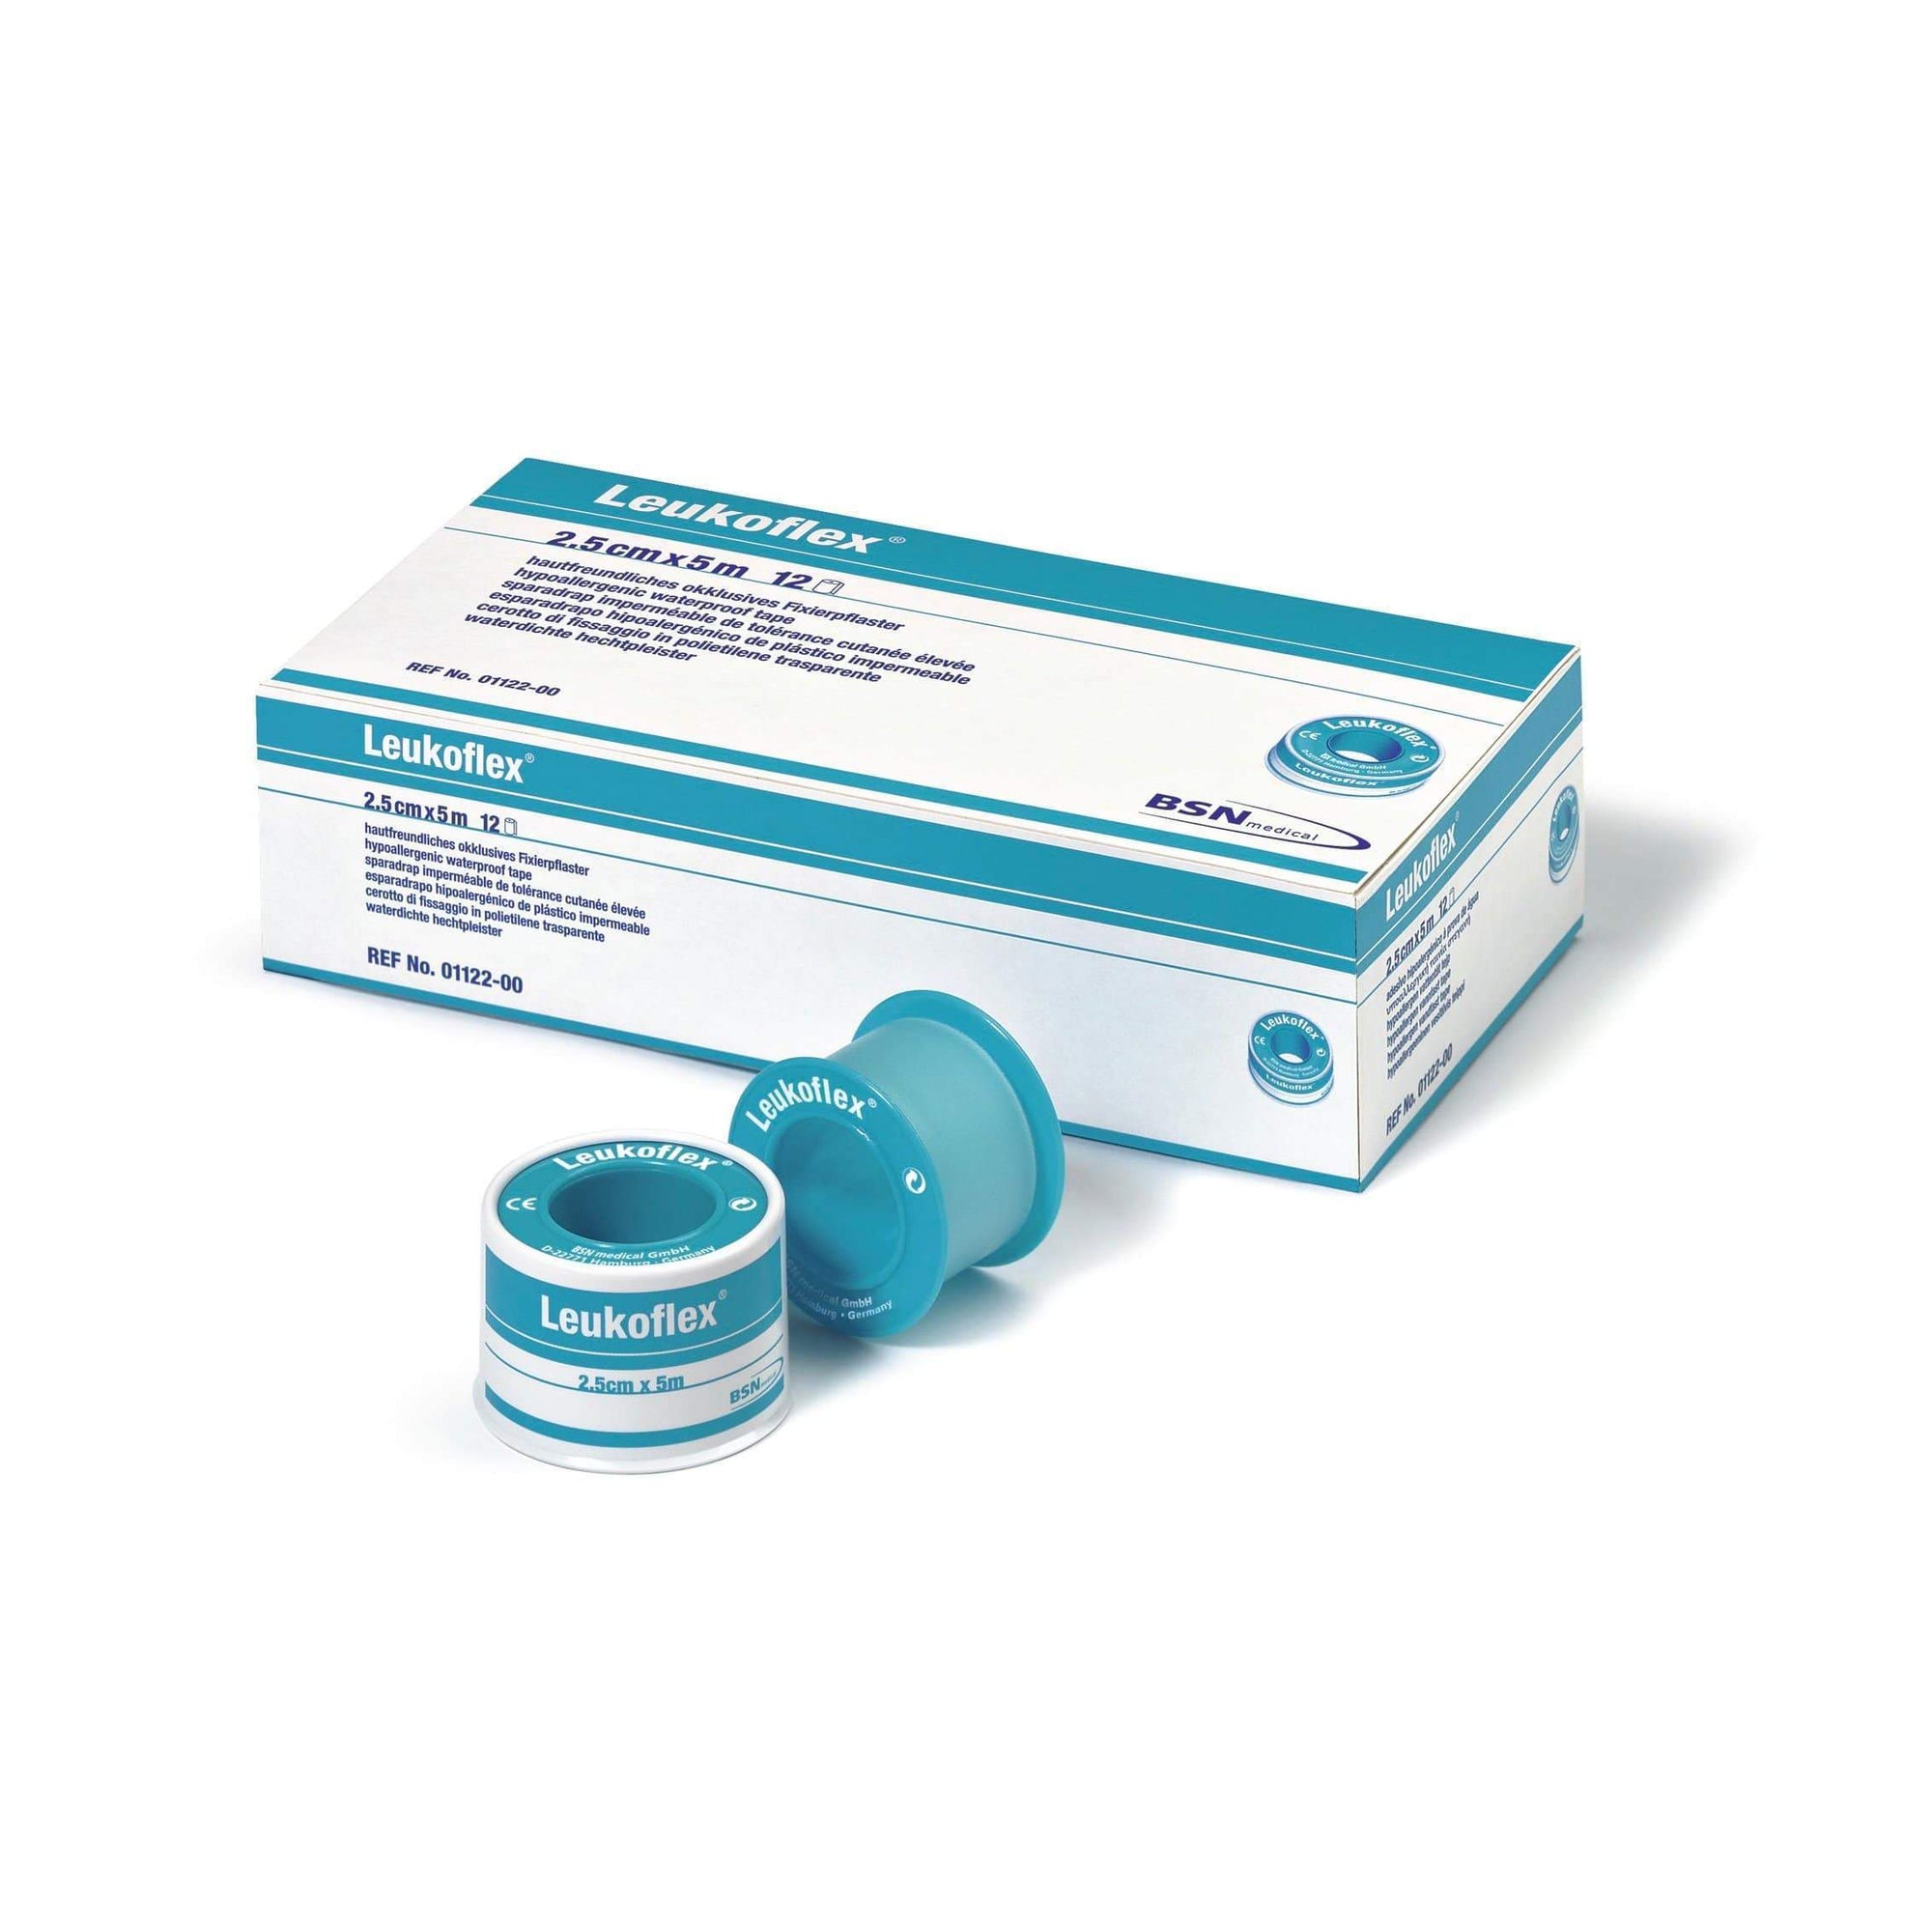 BSN Medical Leukoflex Surgical Tape